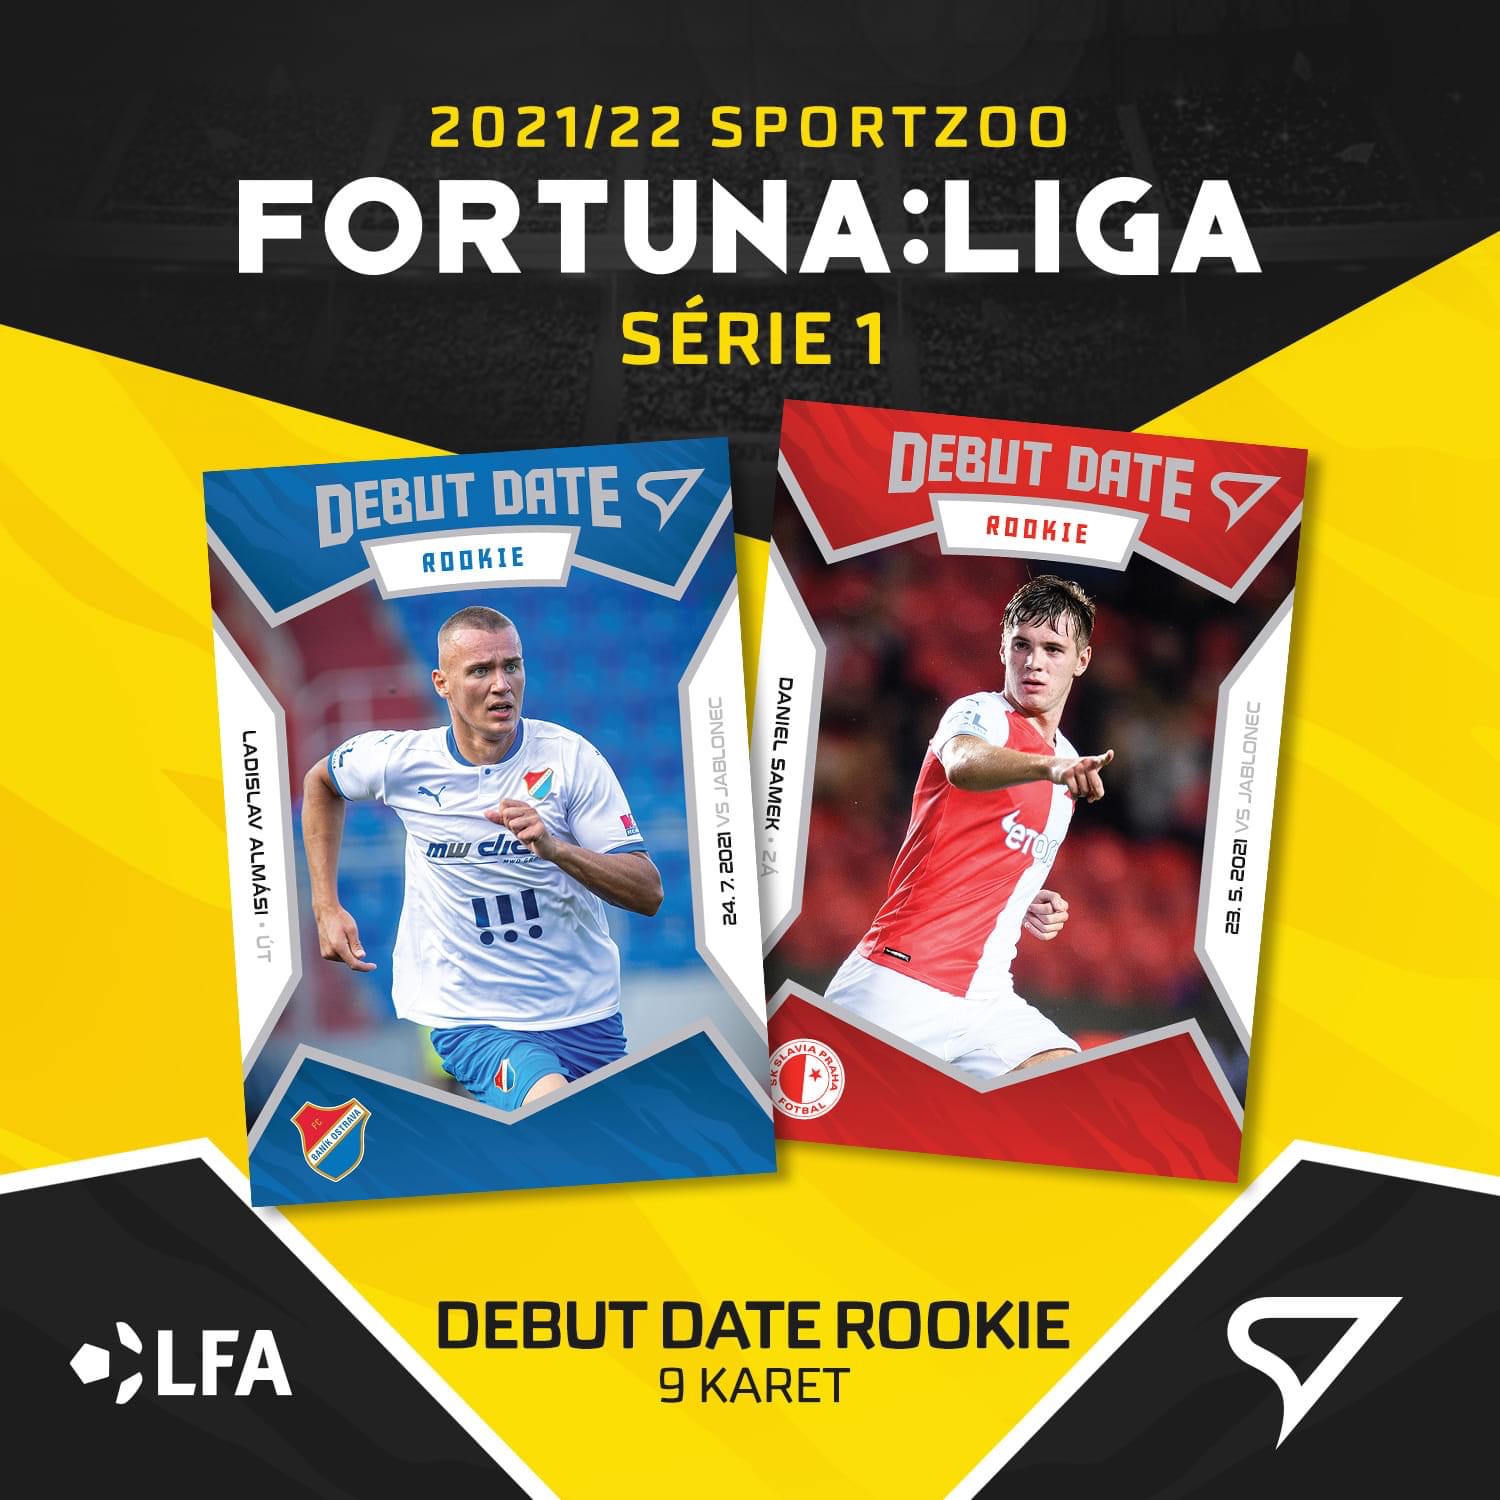 Debut Date Rookie kompletni set 9 karet SportZoo FORTUNA:LIGA 2021/22 1. serie